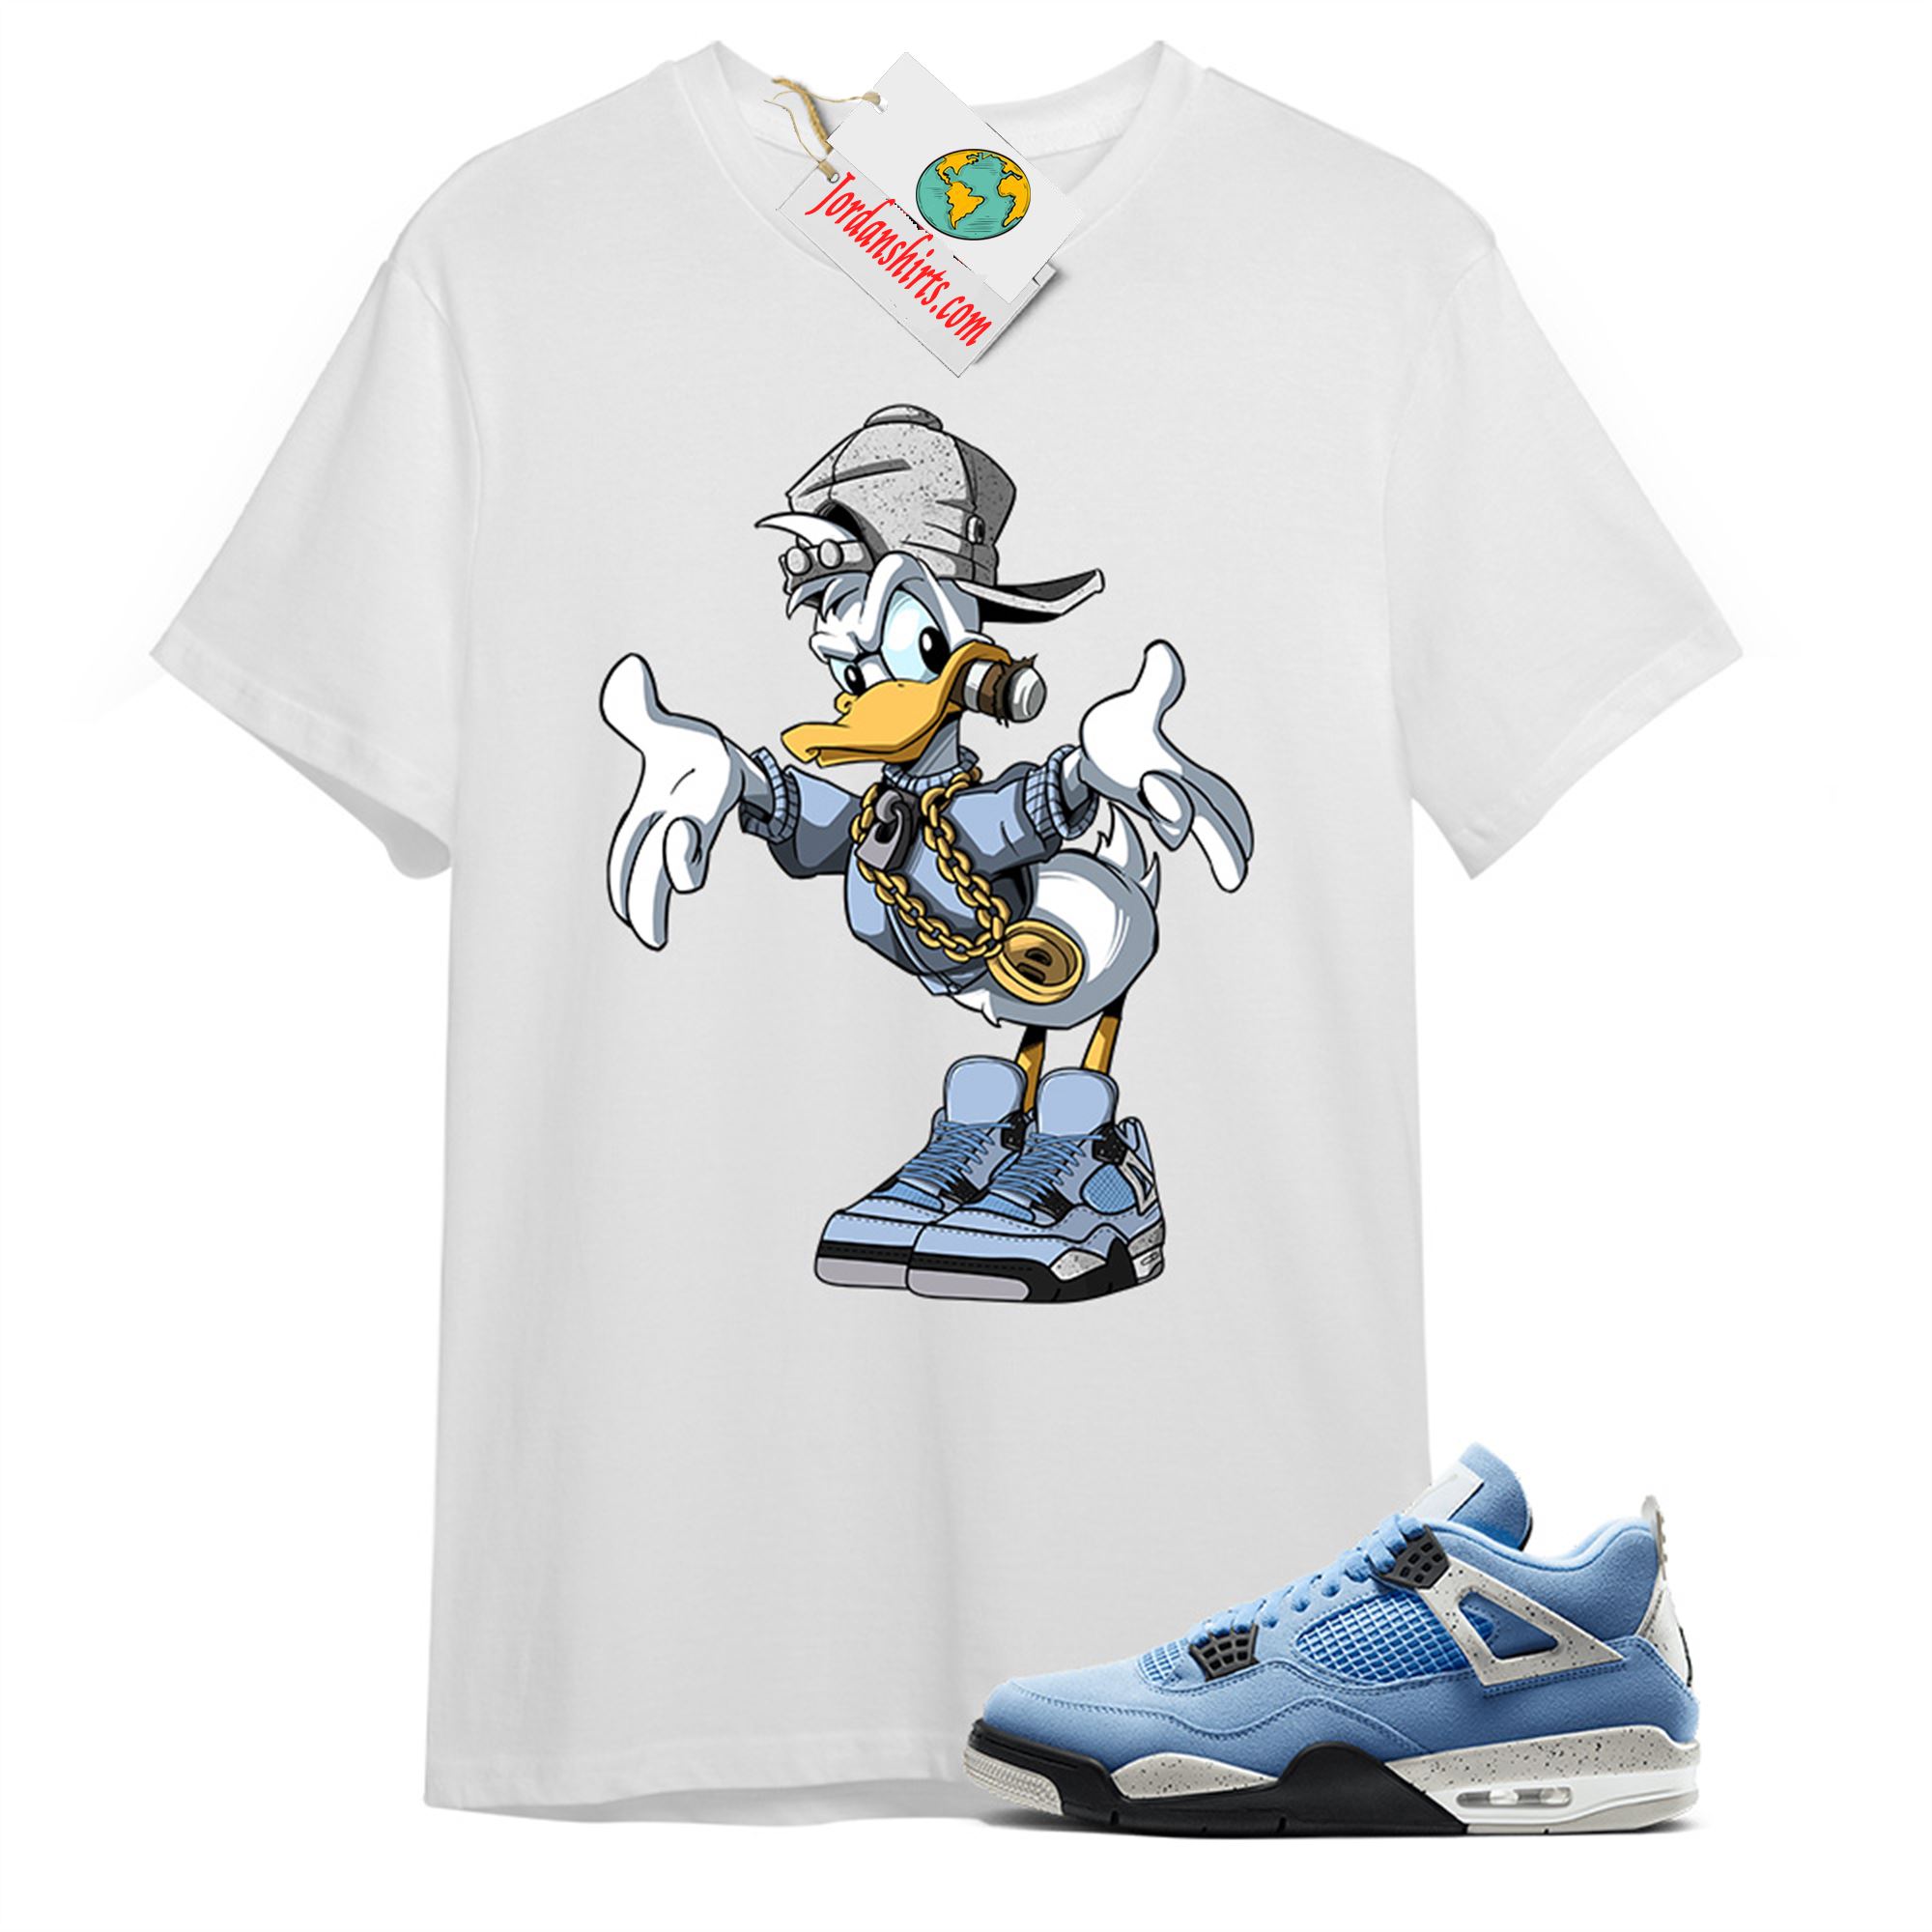 Jordan 4 Shirt, Donald Duck White T-shirt Air Jordan 4 University Blue 4s Plus Size Up To 5xl